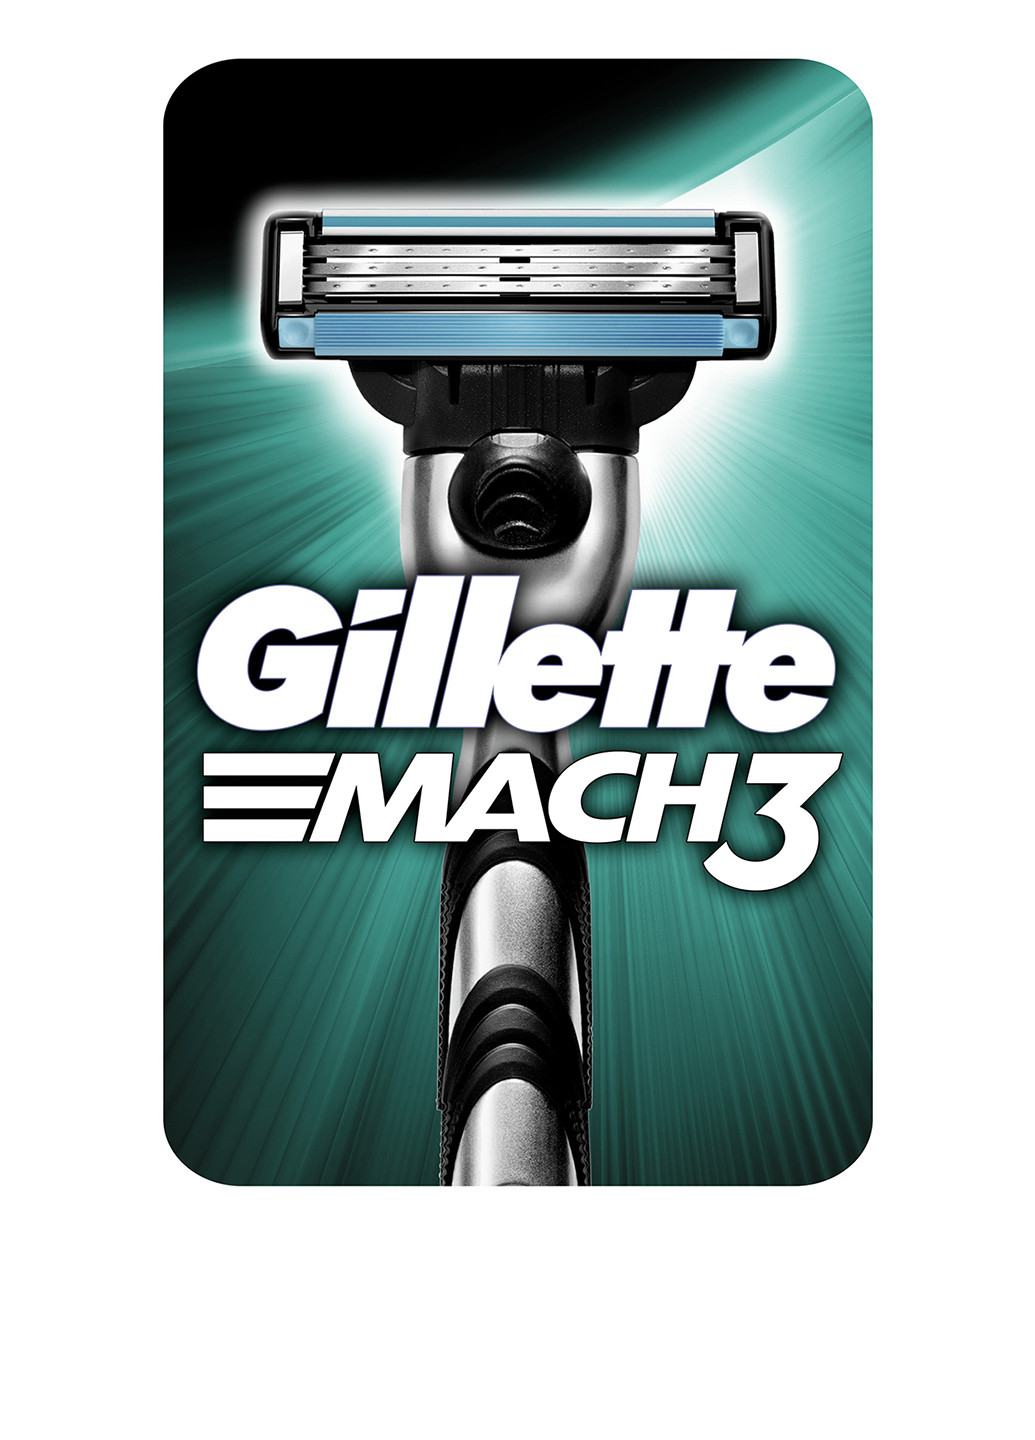 Станок MACH3 1 картридж Gillette (14295512)